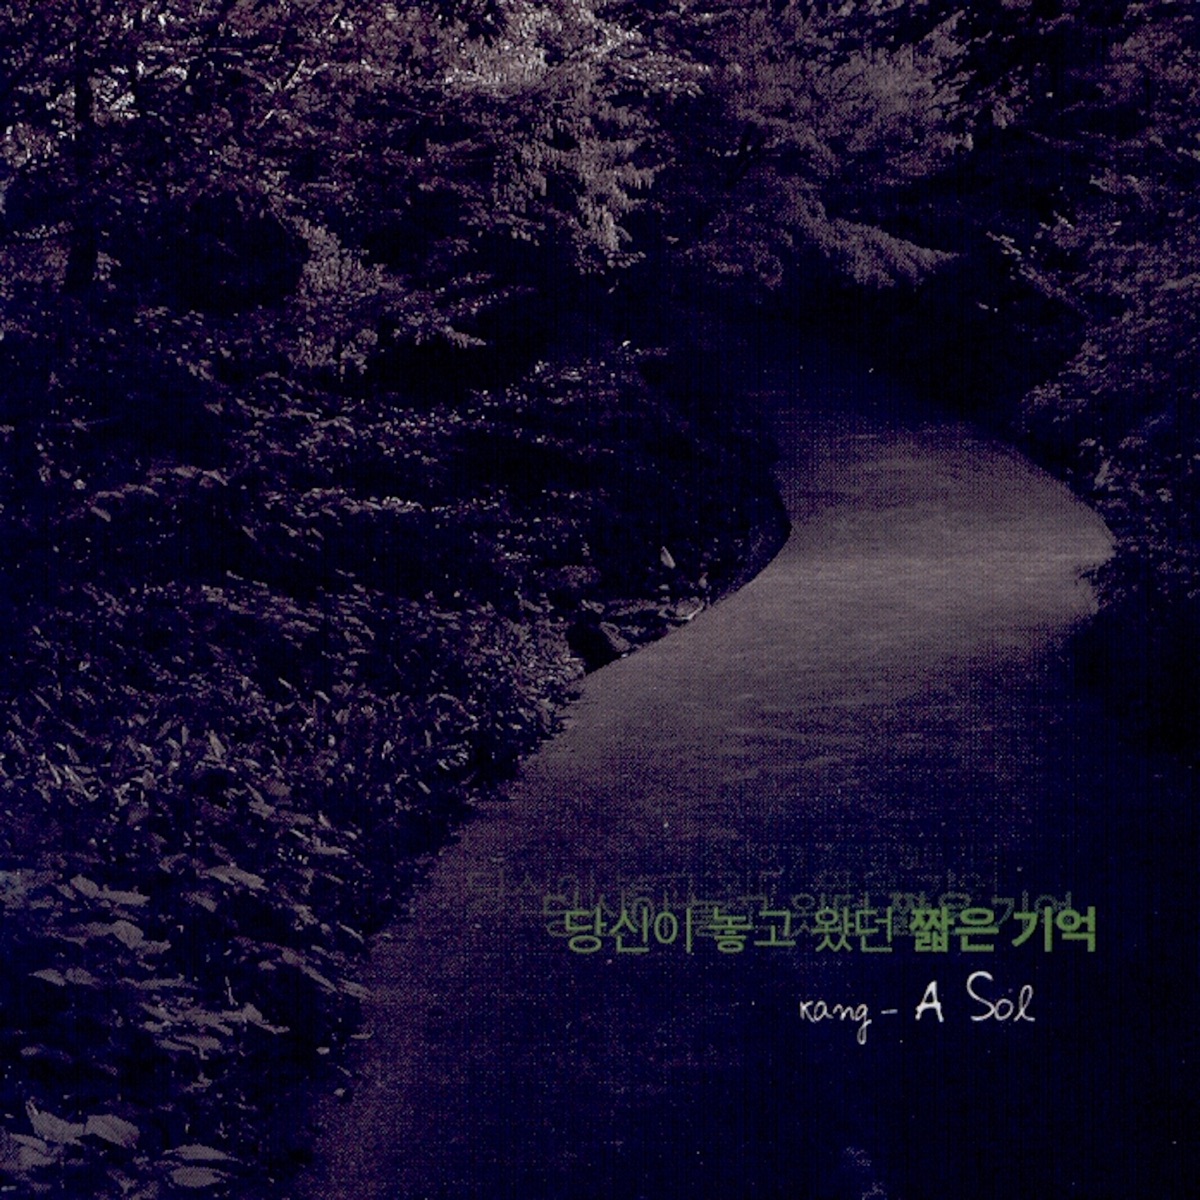 Kang Asol – The Short Memory You Left